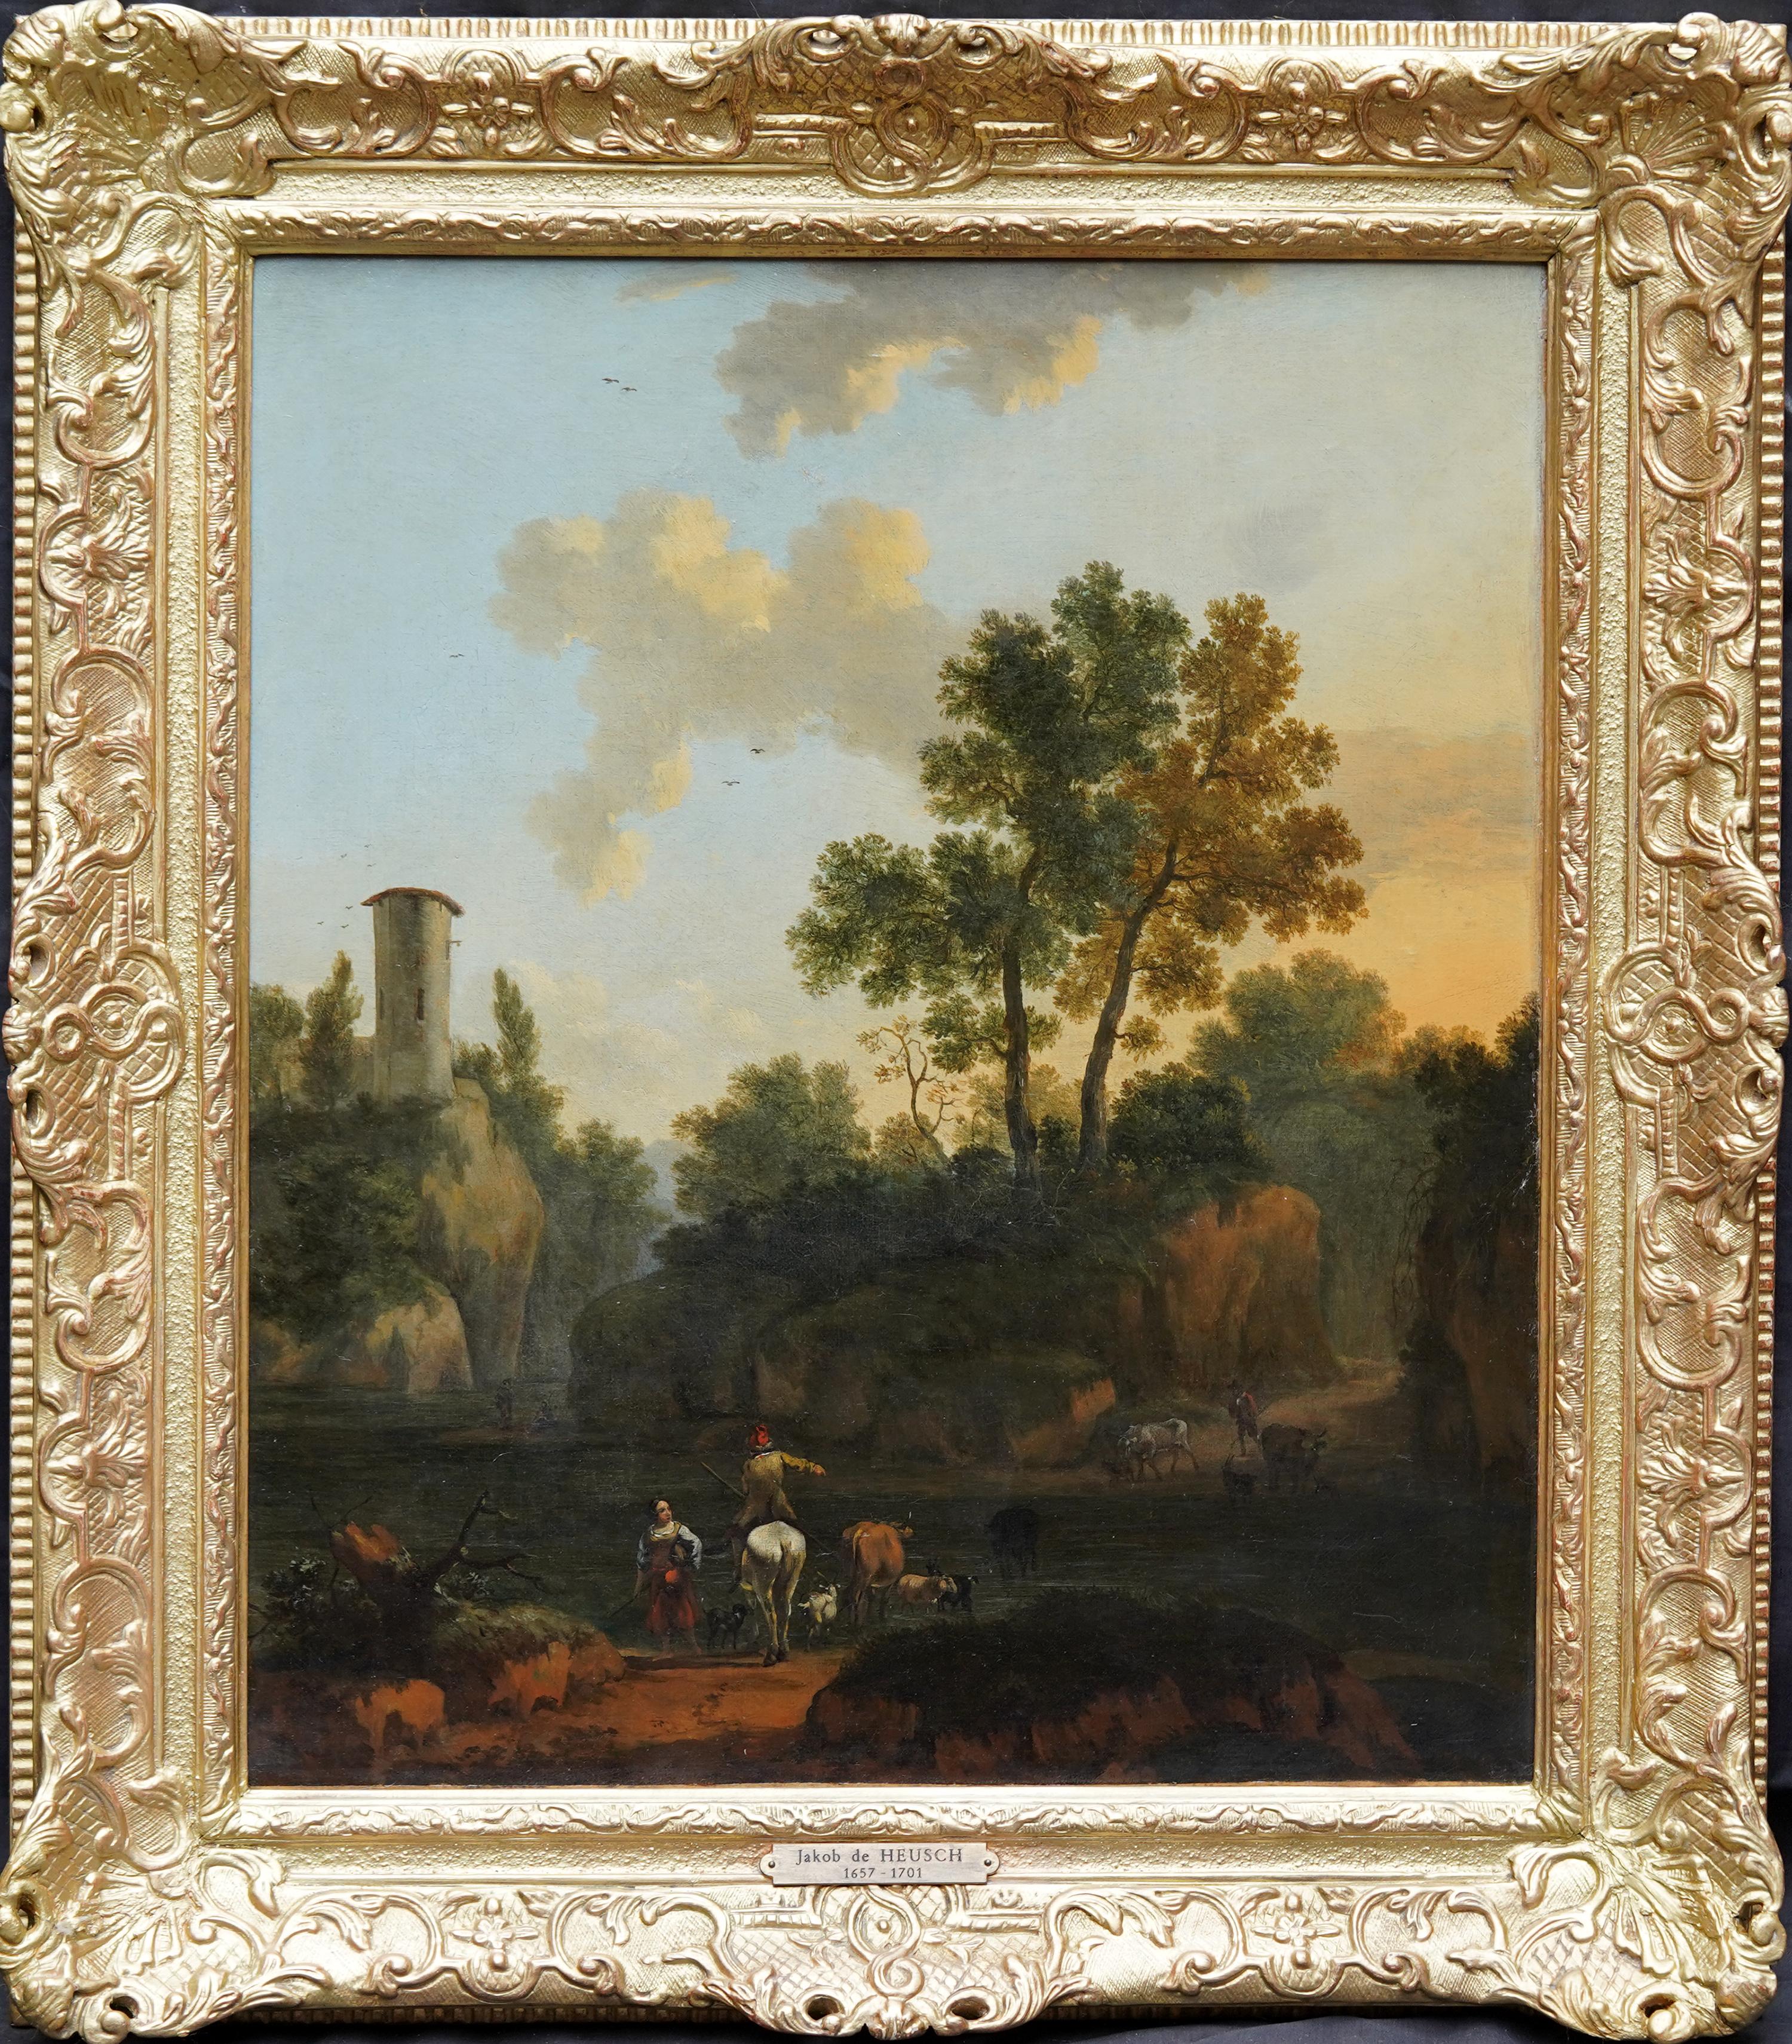 Wooded Figurative River Landscape - Dutch 17thC Golden Age art oil painting  For Sale 9